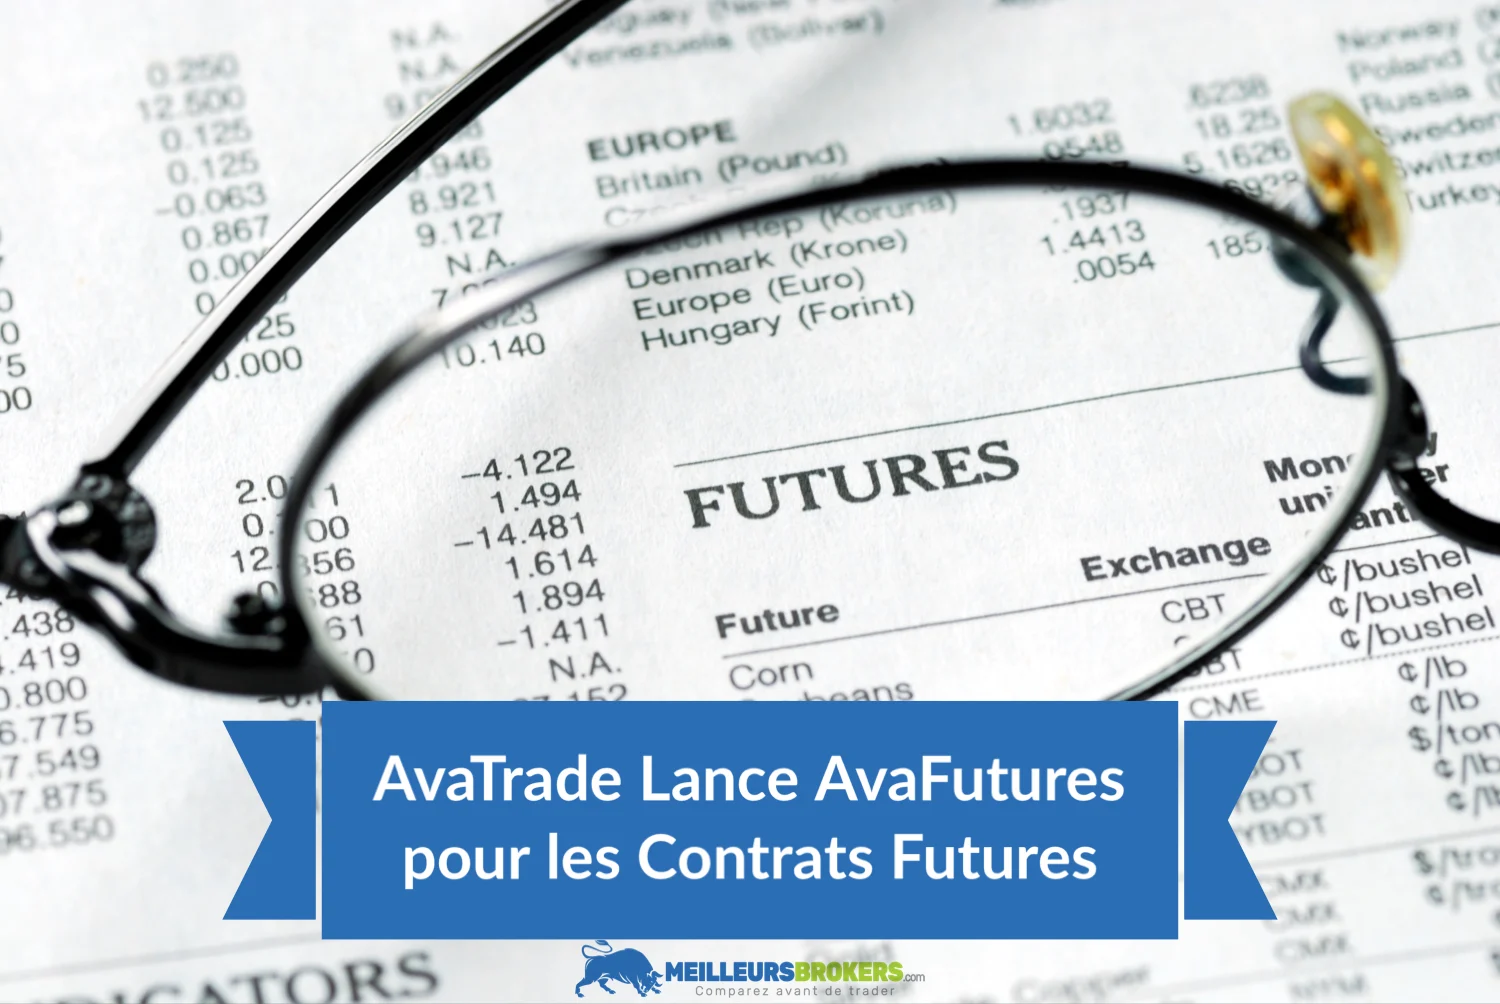 AvaTrade offre désormais l’achat de contrats futures